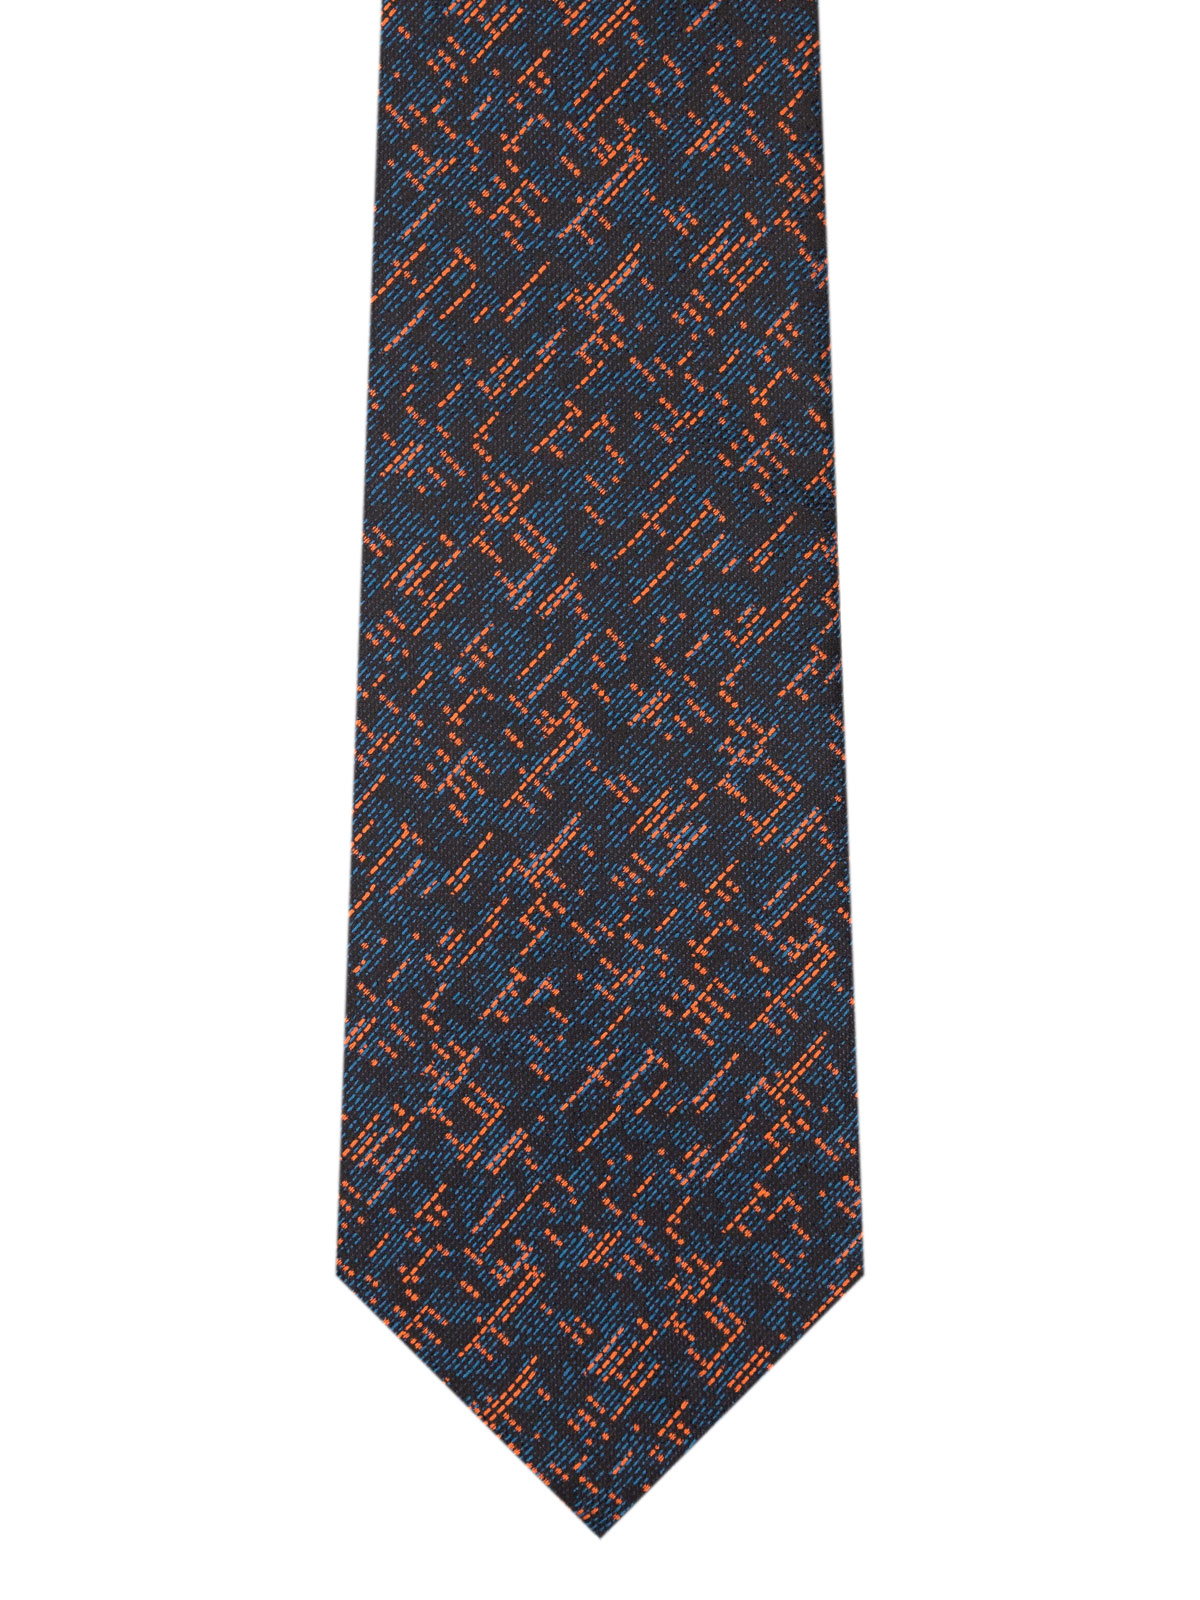 Black tie with orange threads - 10202 - € 14.06 img2